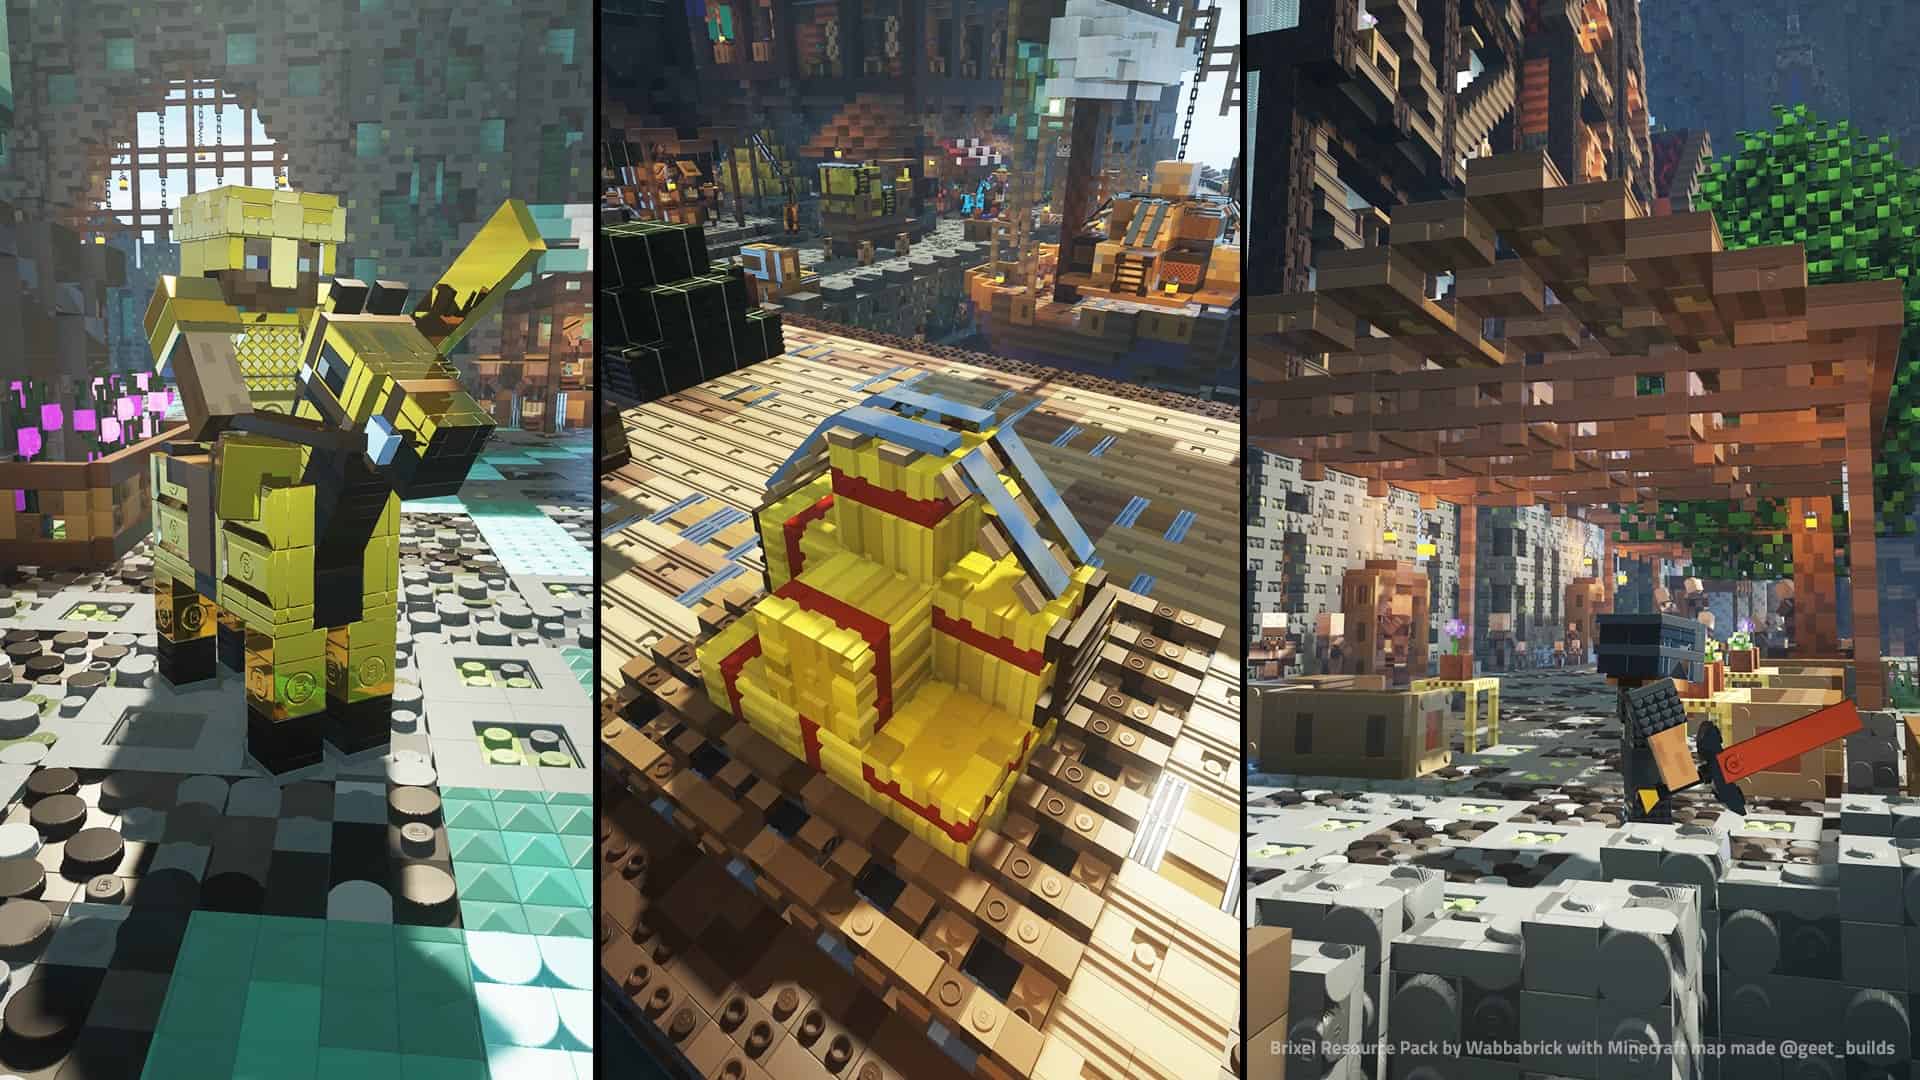 LEGO Villagers Minecraft Texture Pack